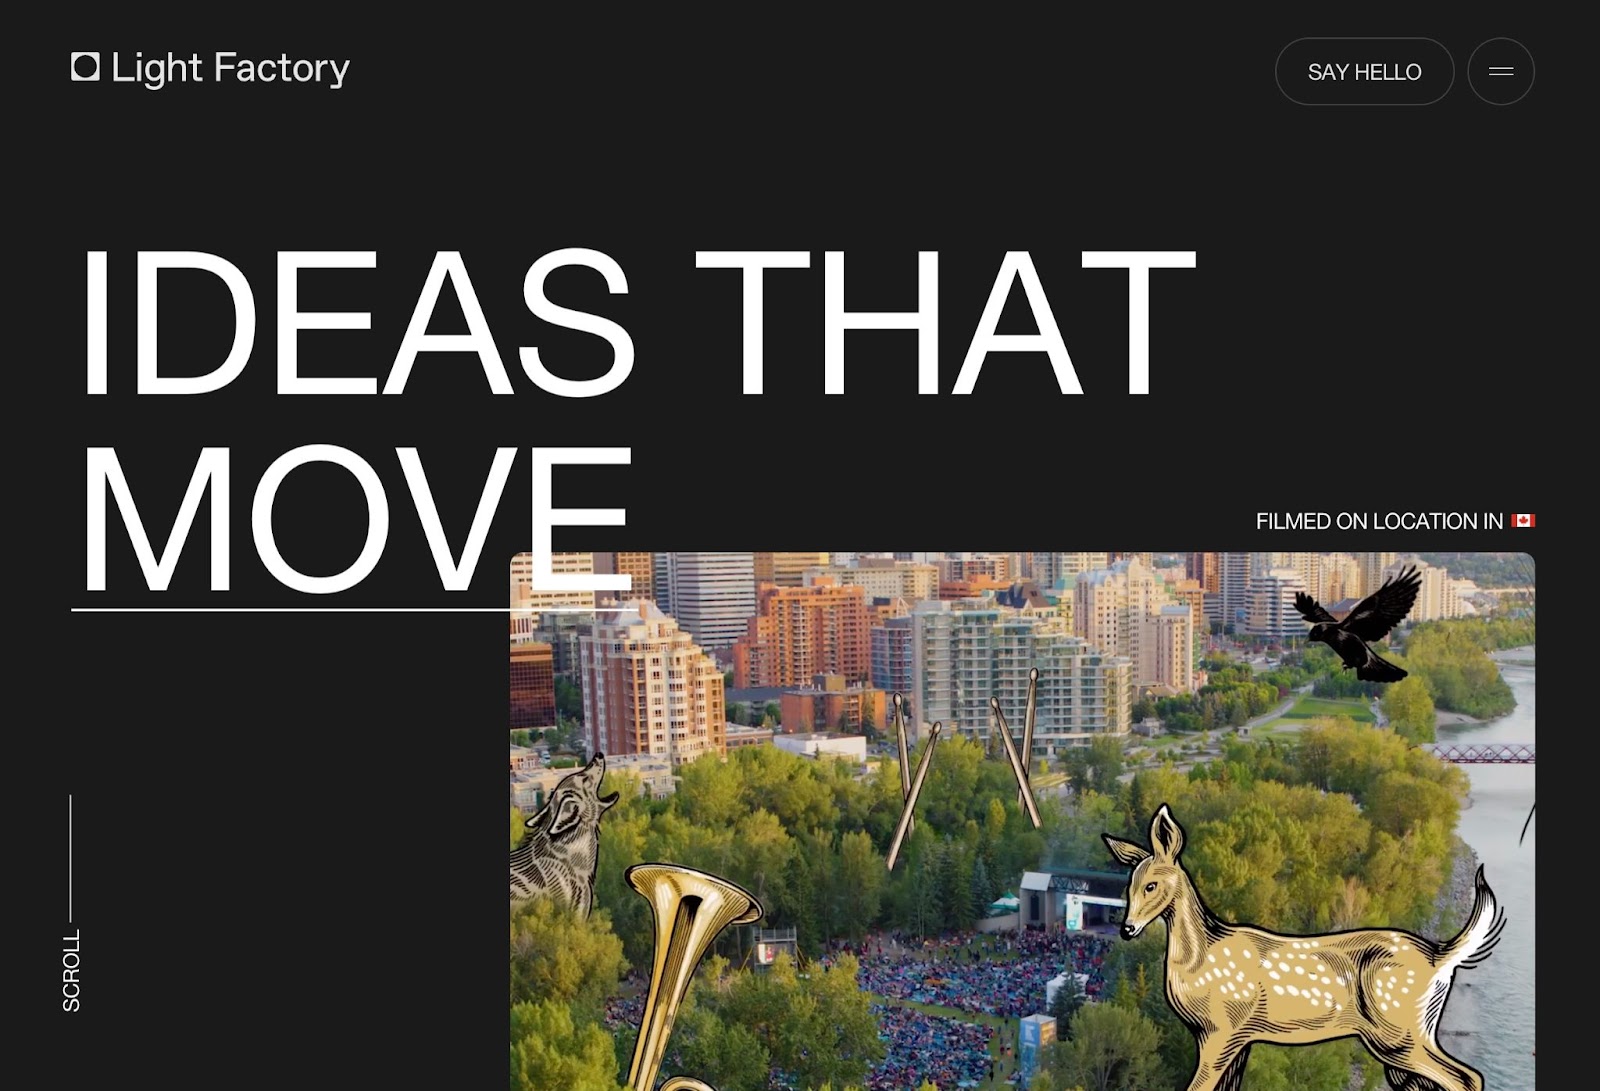 Light Factory 的全黑網站標題帶有大寫的白色文字，上面寫著“IDEAS THT MOVE”，上面是多倫多的鳥瞰圖，城市圖像上有角和鹿的插圖。